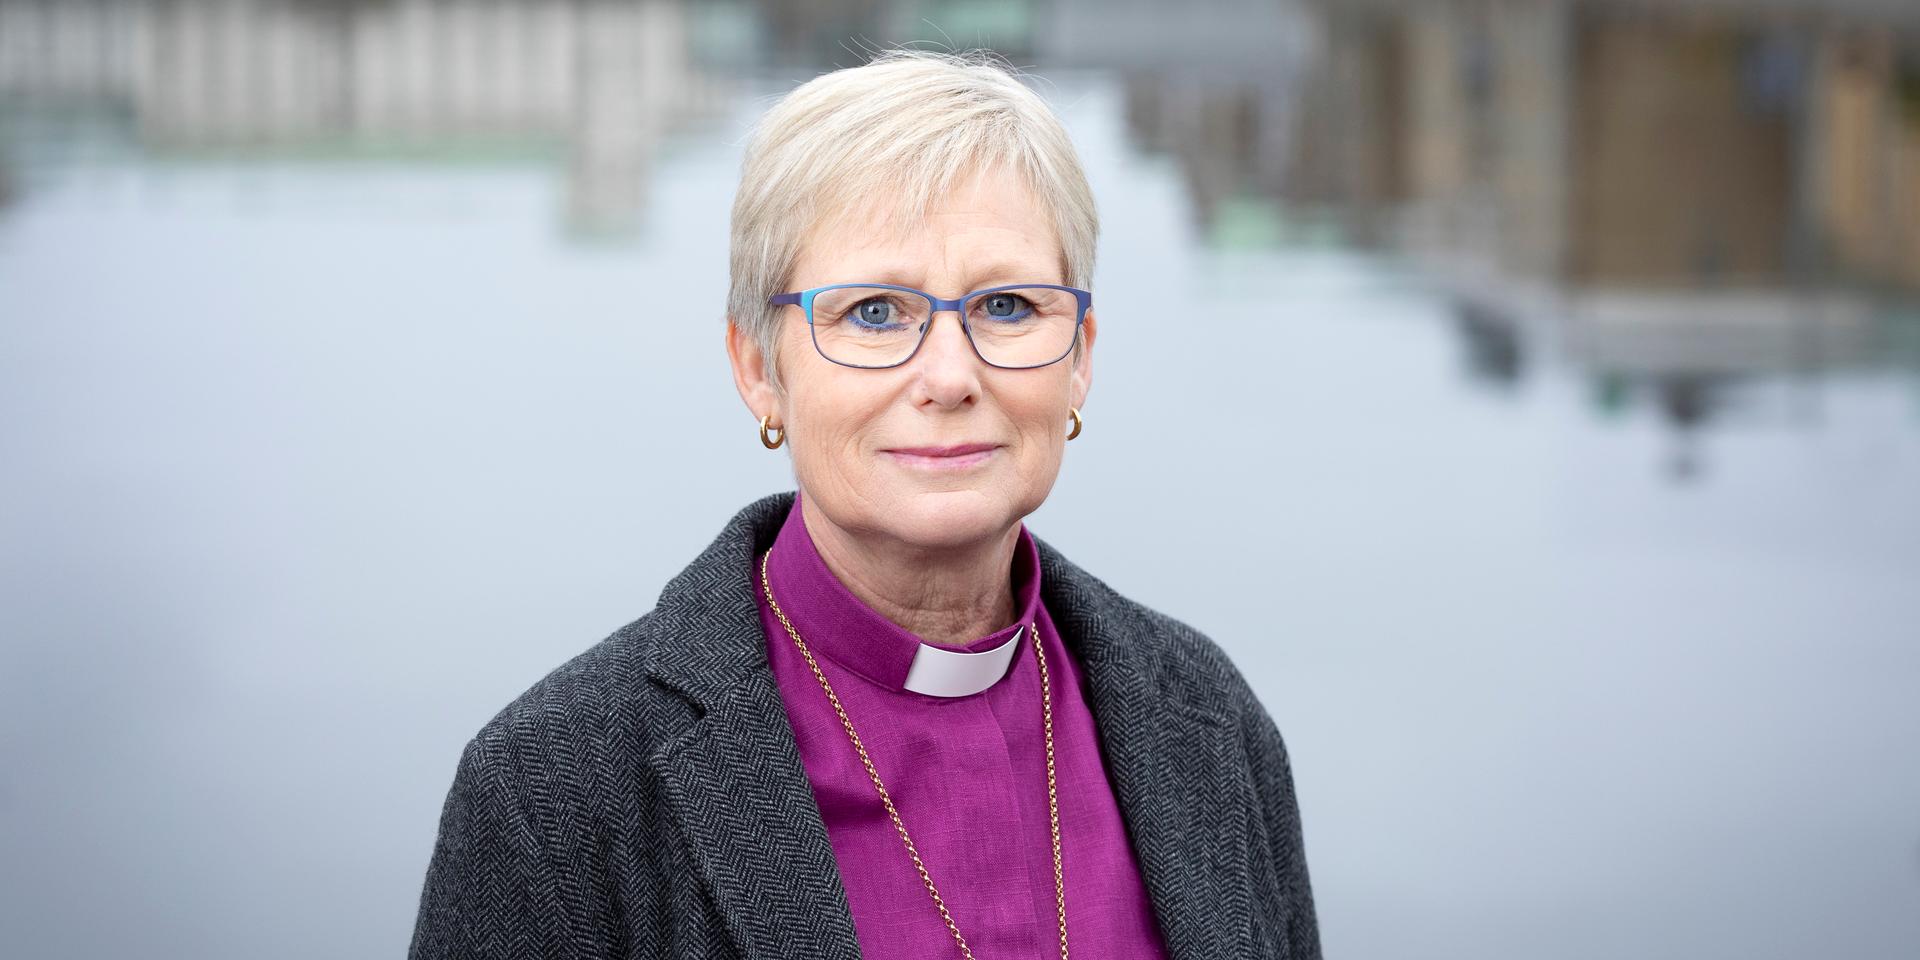 Susanne Rappman är biskop i Göteborgs stift. Innan hon blev det var hon kyrkoherde i Mölndal. 